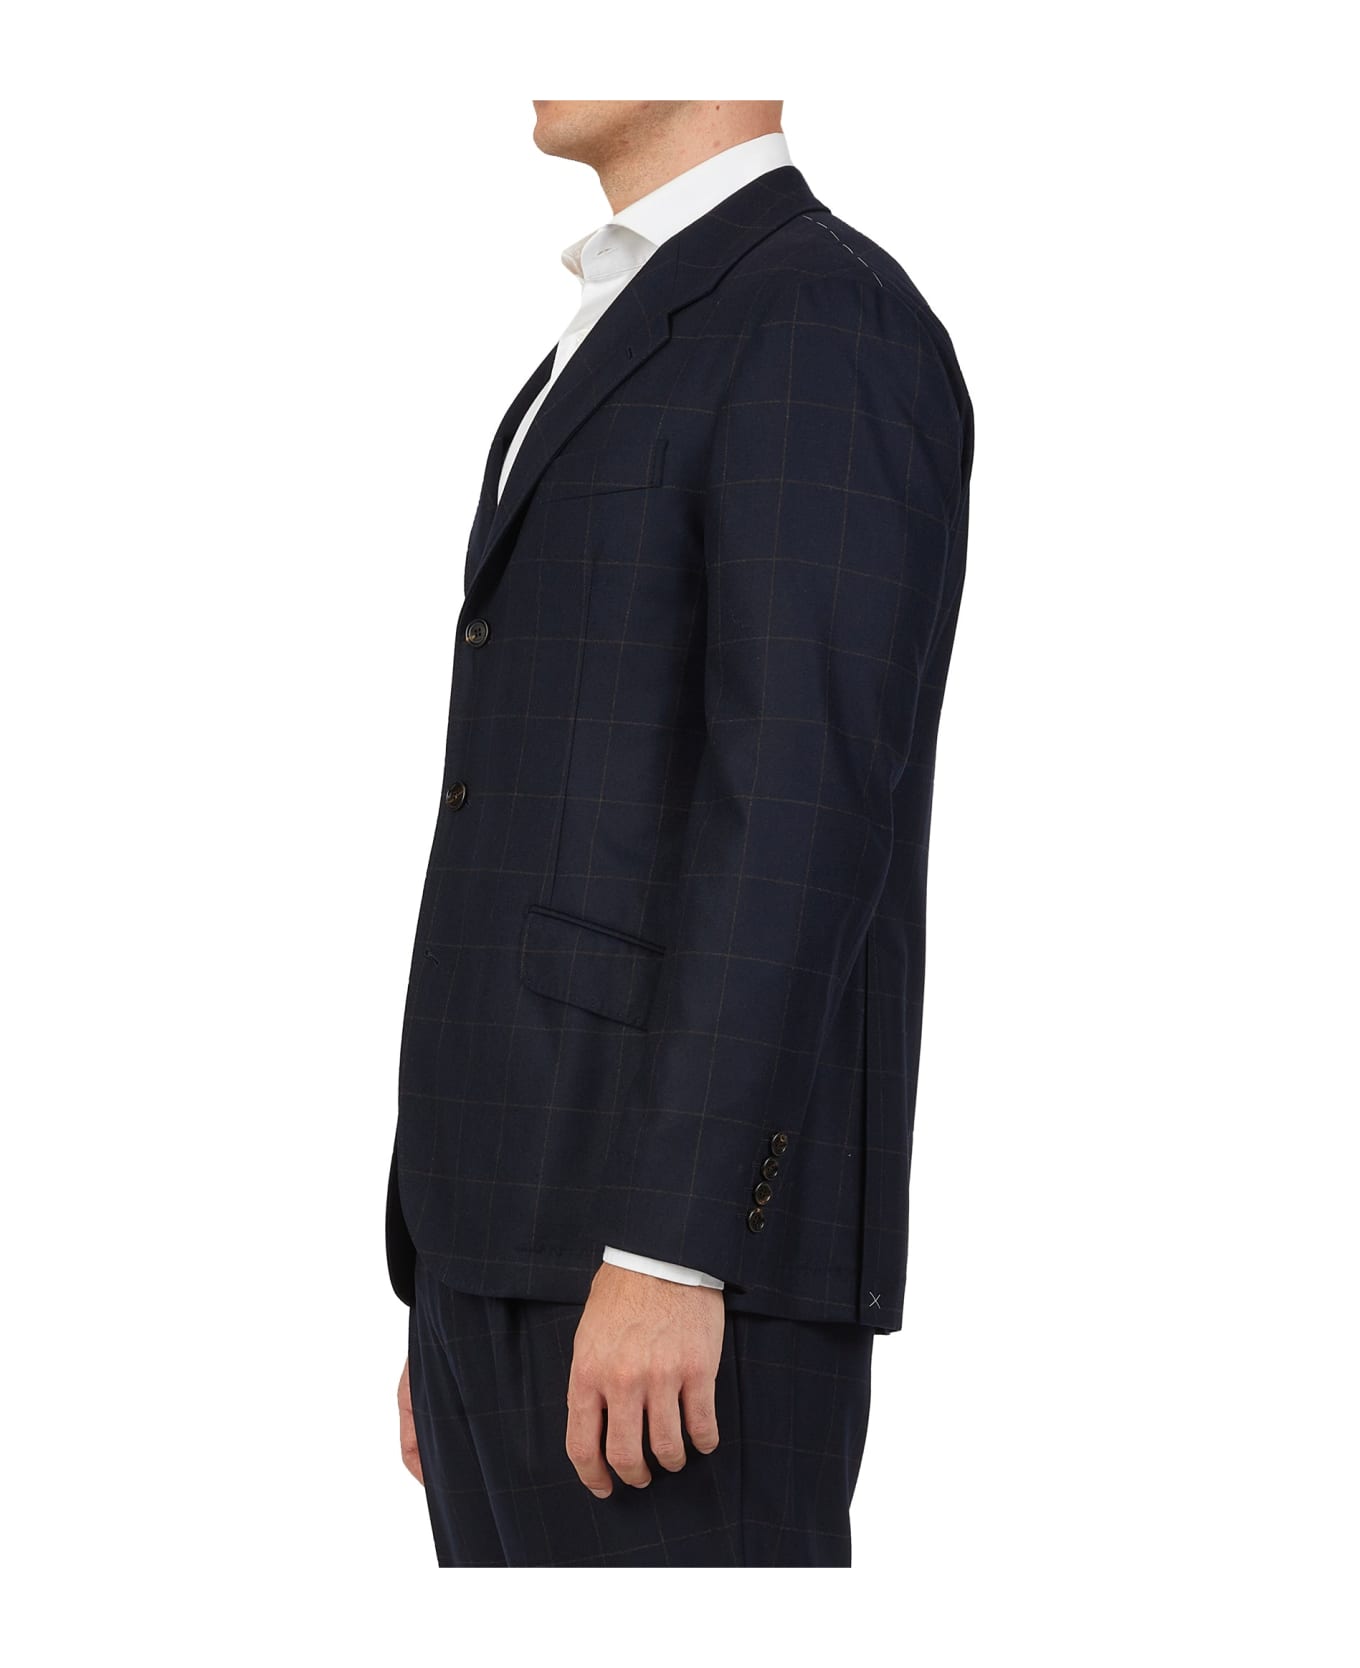 Brunello Cucinelli Wool Suit - Blue スーツ